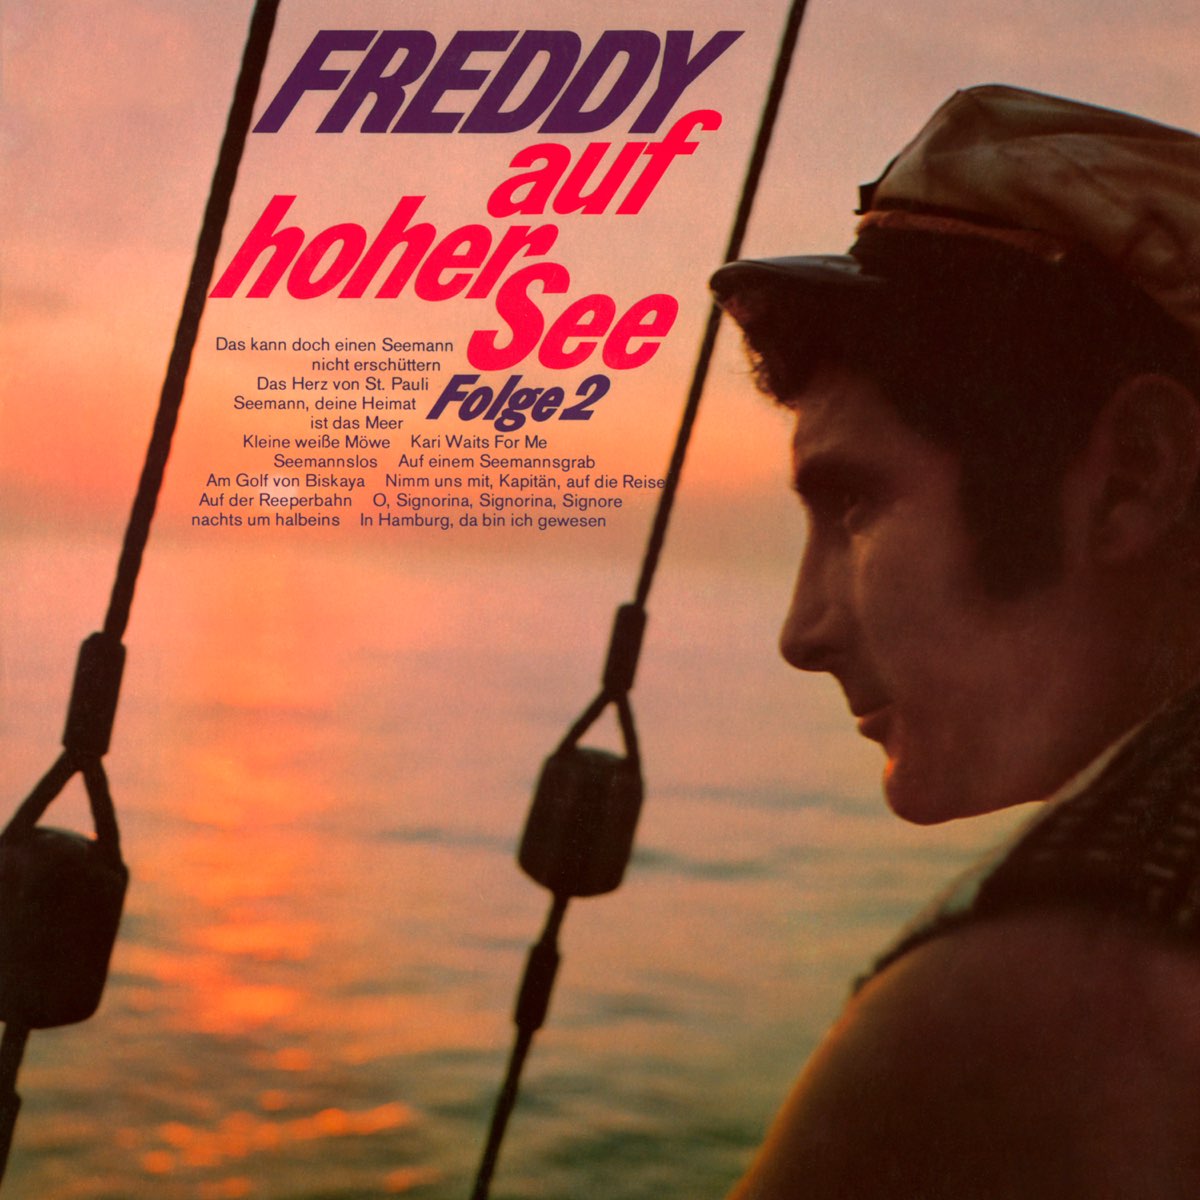 Freddy auf hoher See, Folge 2 de Freddy Quinn en Apple Music